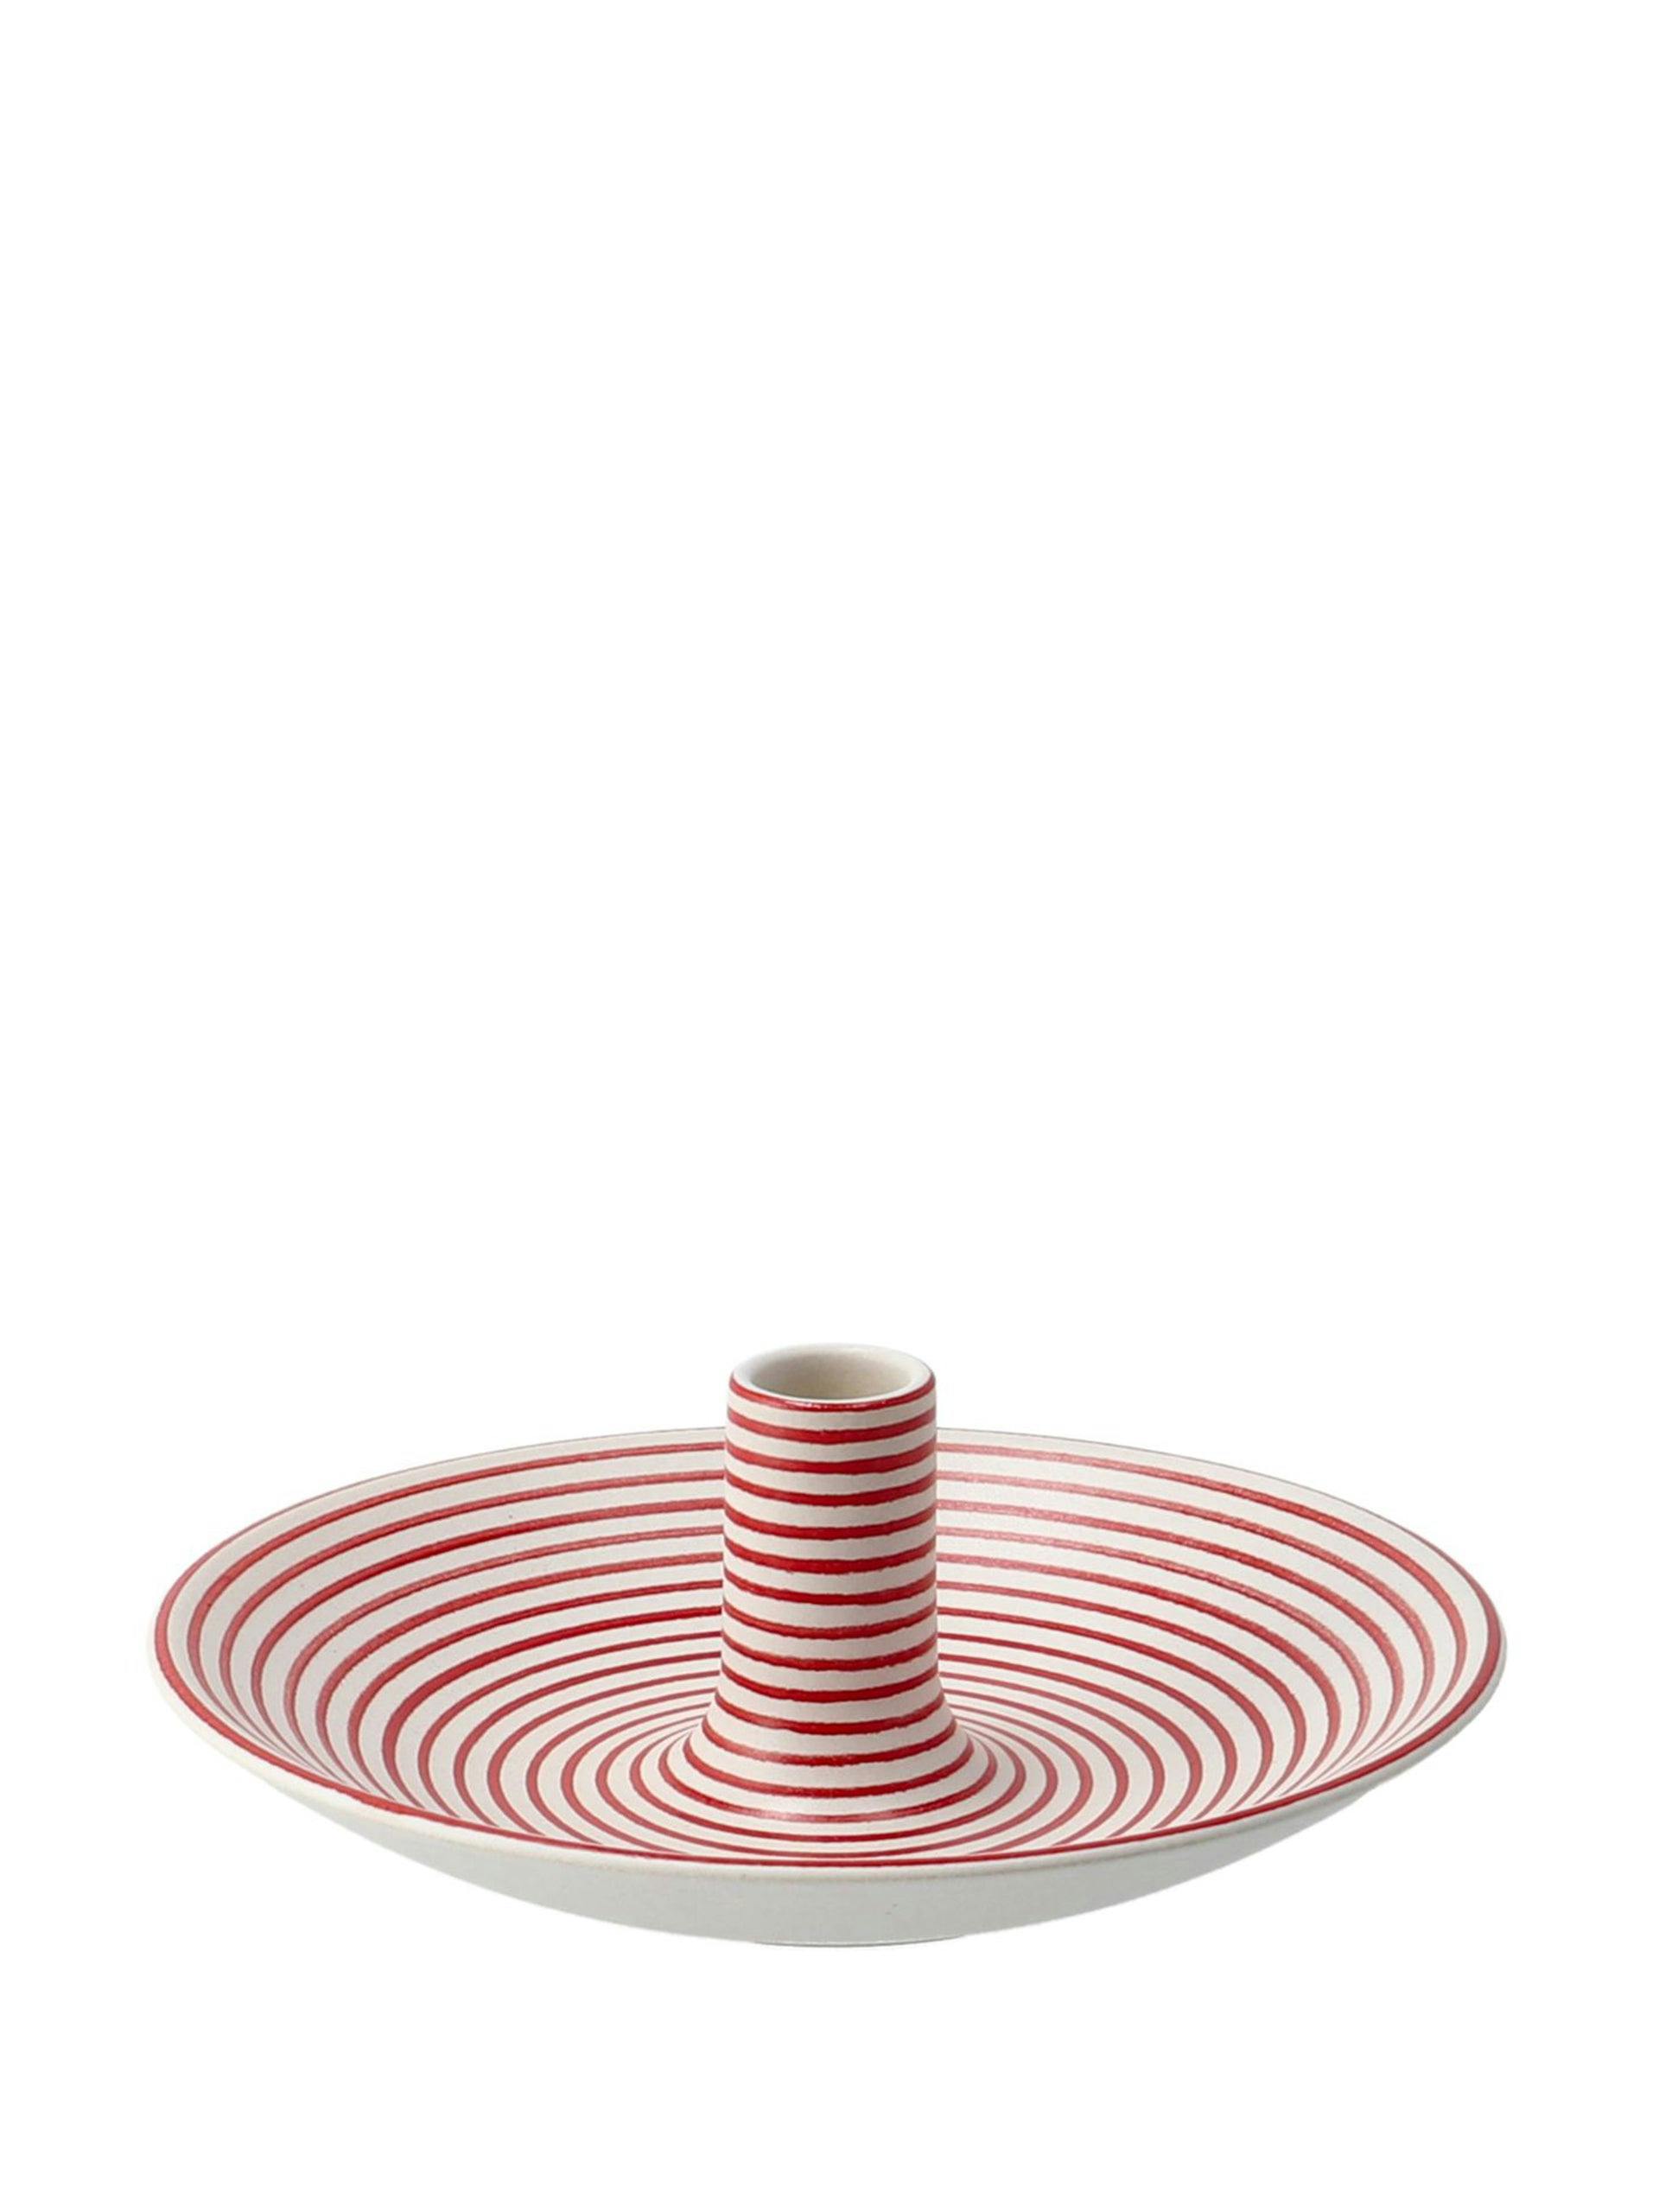 Handmade striped ceramic candle holder